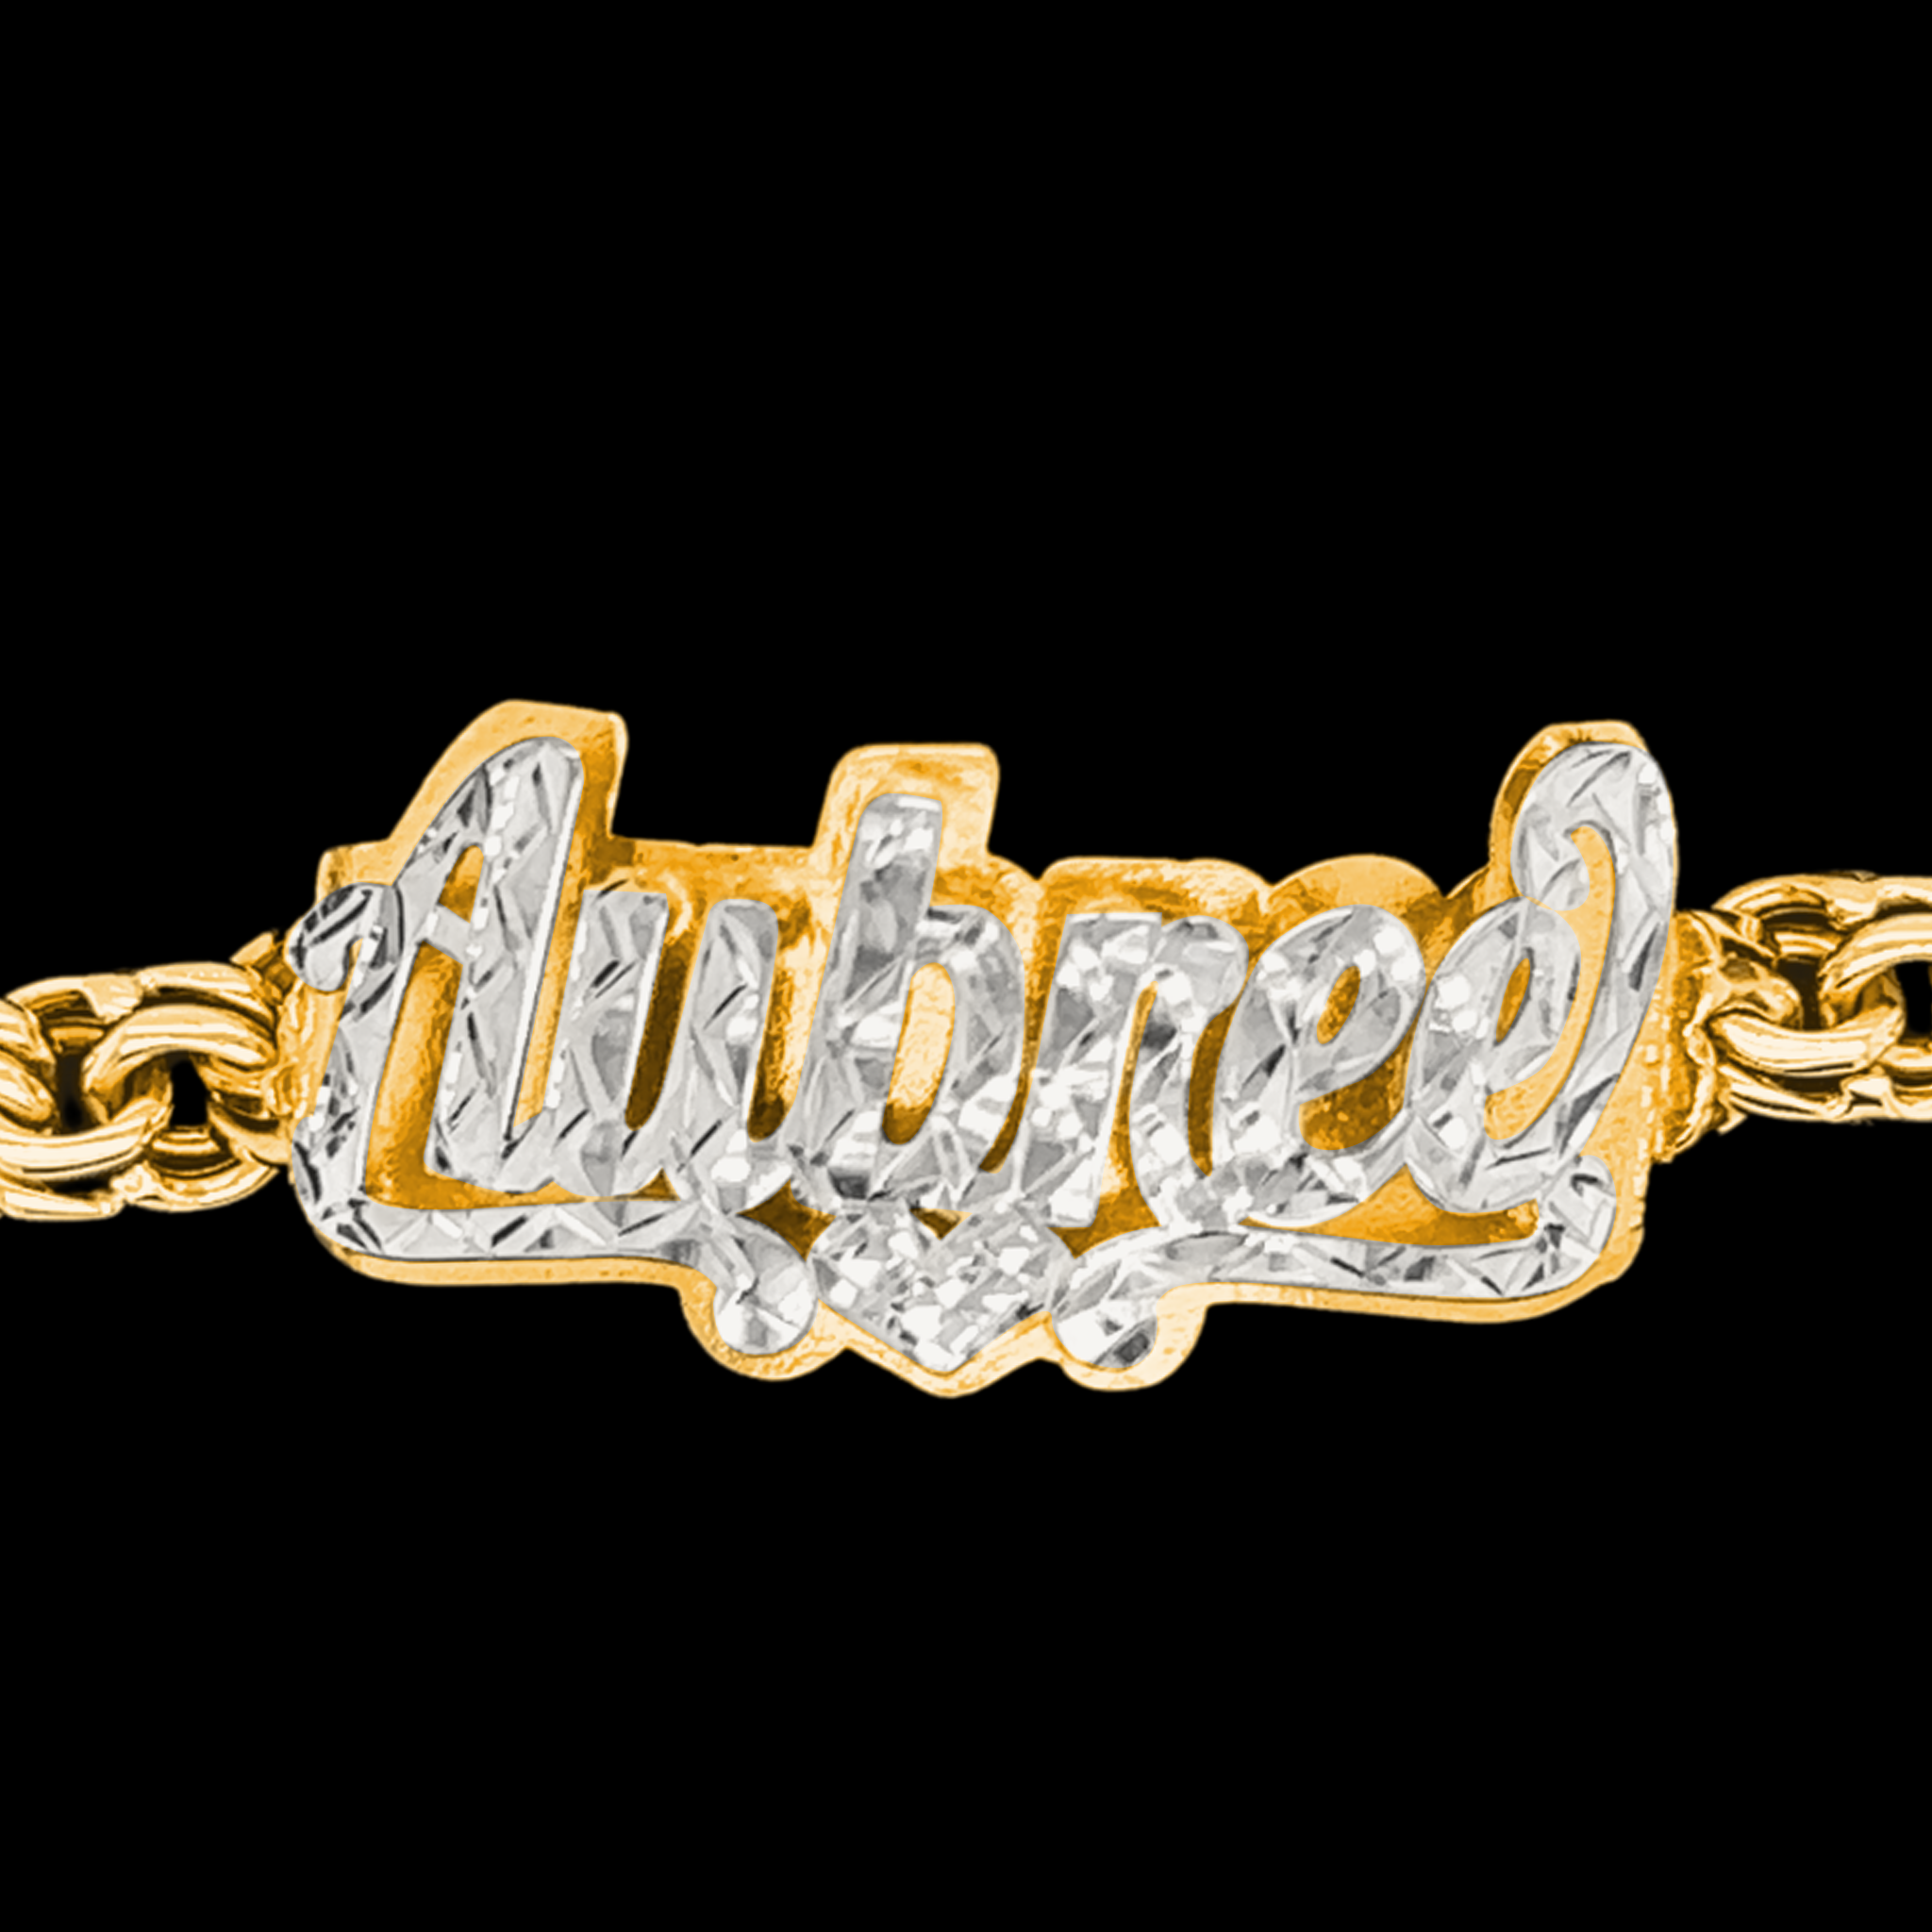 10KT Gold Women Chino Link Bracelet with Cursive Name/Esclava para Mujer 10KT Tejido Chino con Nombre Cursiva